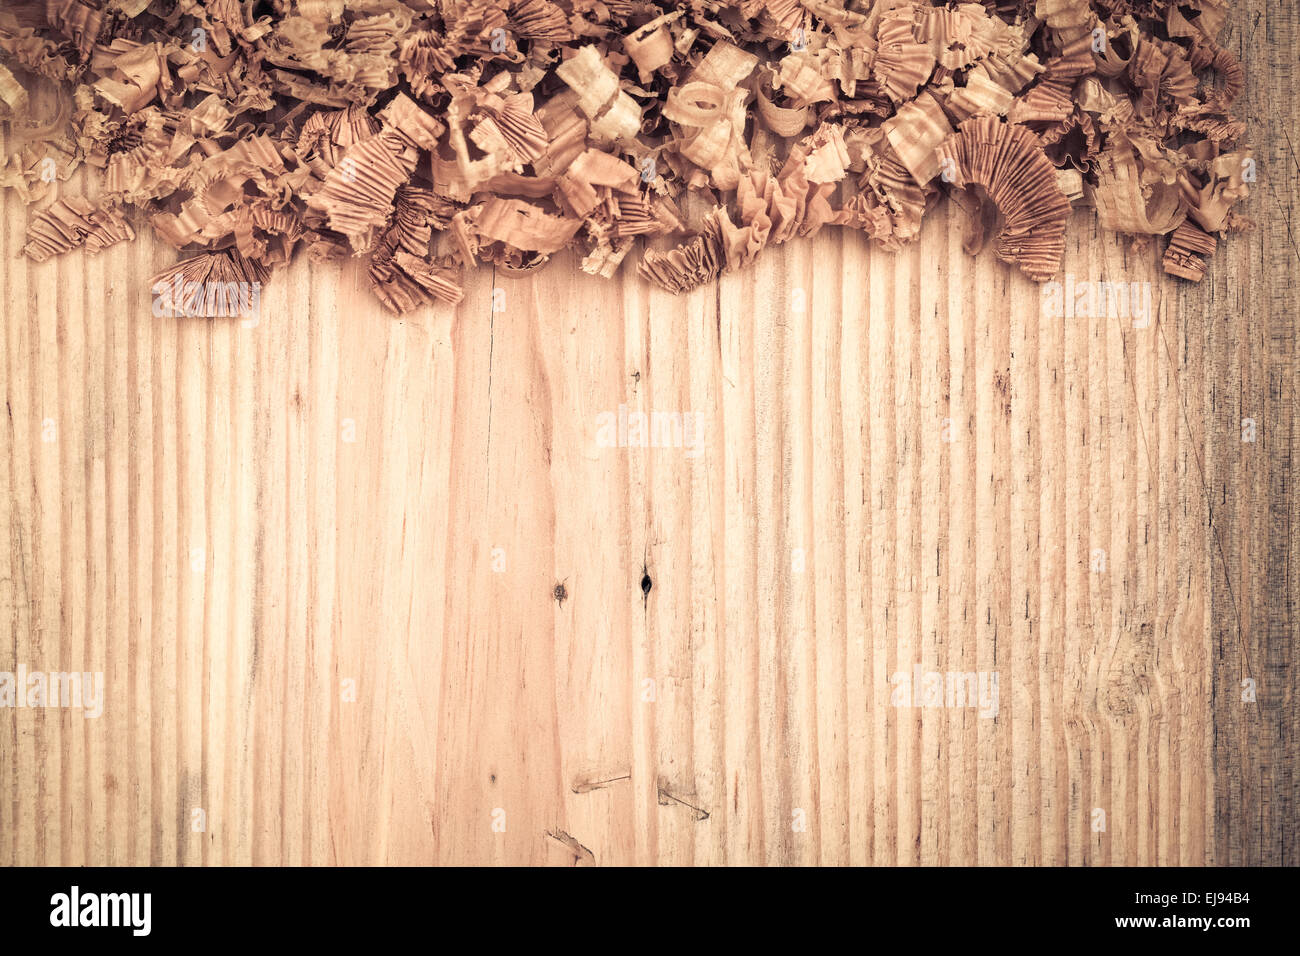 Holzbrett mit Späne Hintergrund Stockfoto